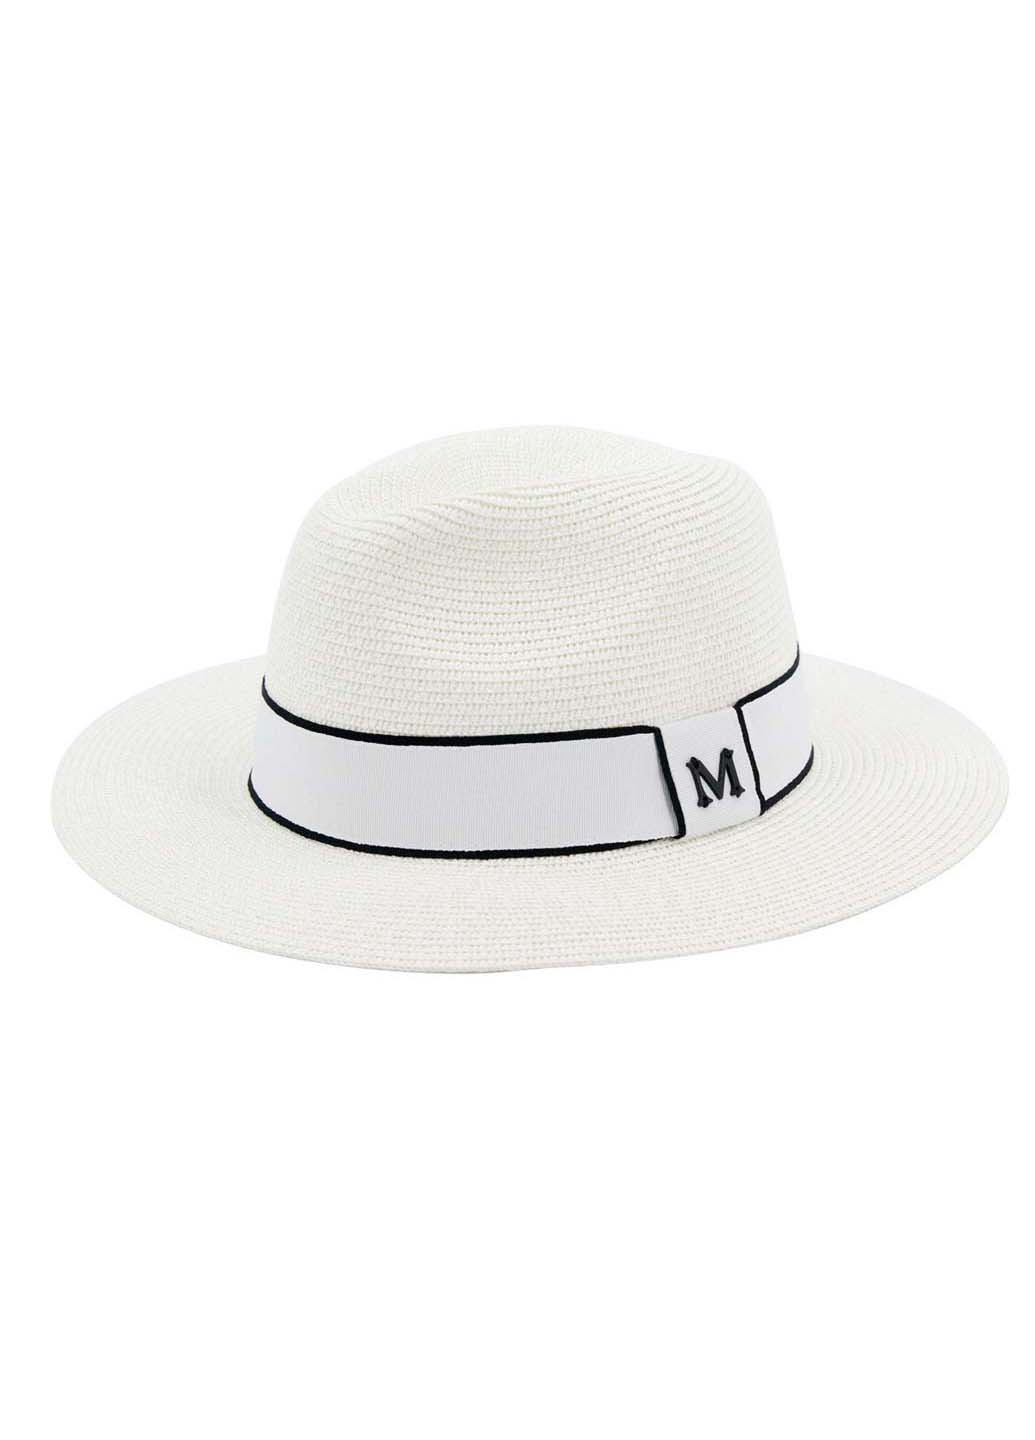 Шляпа Sumwin магда (254469134)